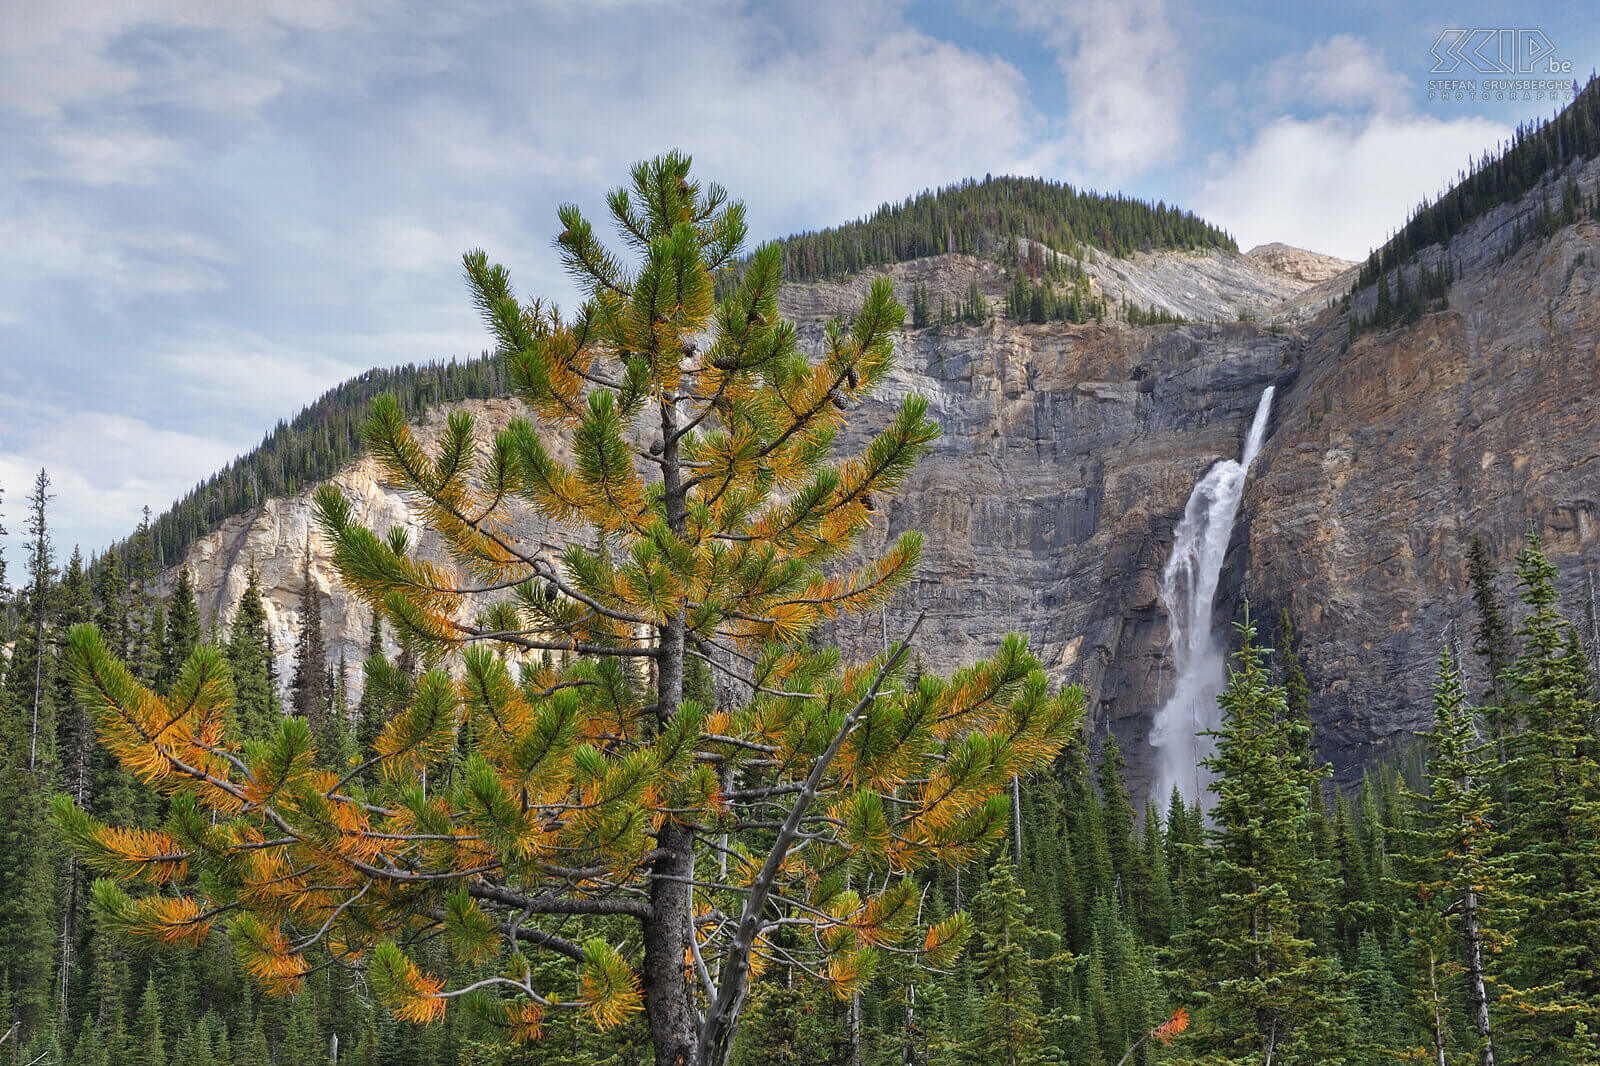 Yoho NP - Takkakaw Falls The Takkakw Falls (245m) in Yoho NP are the highest falls in Canada. Stefan Cruysberghs